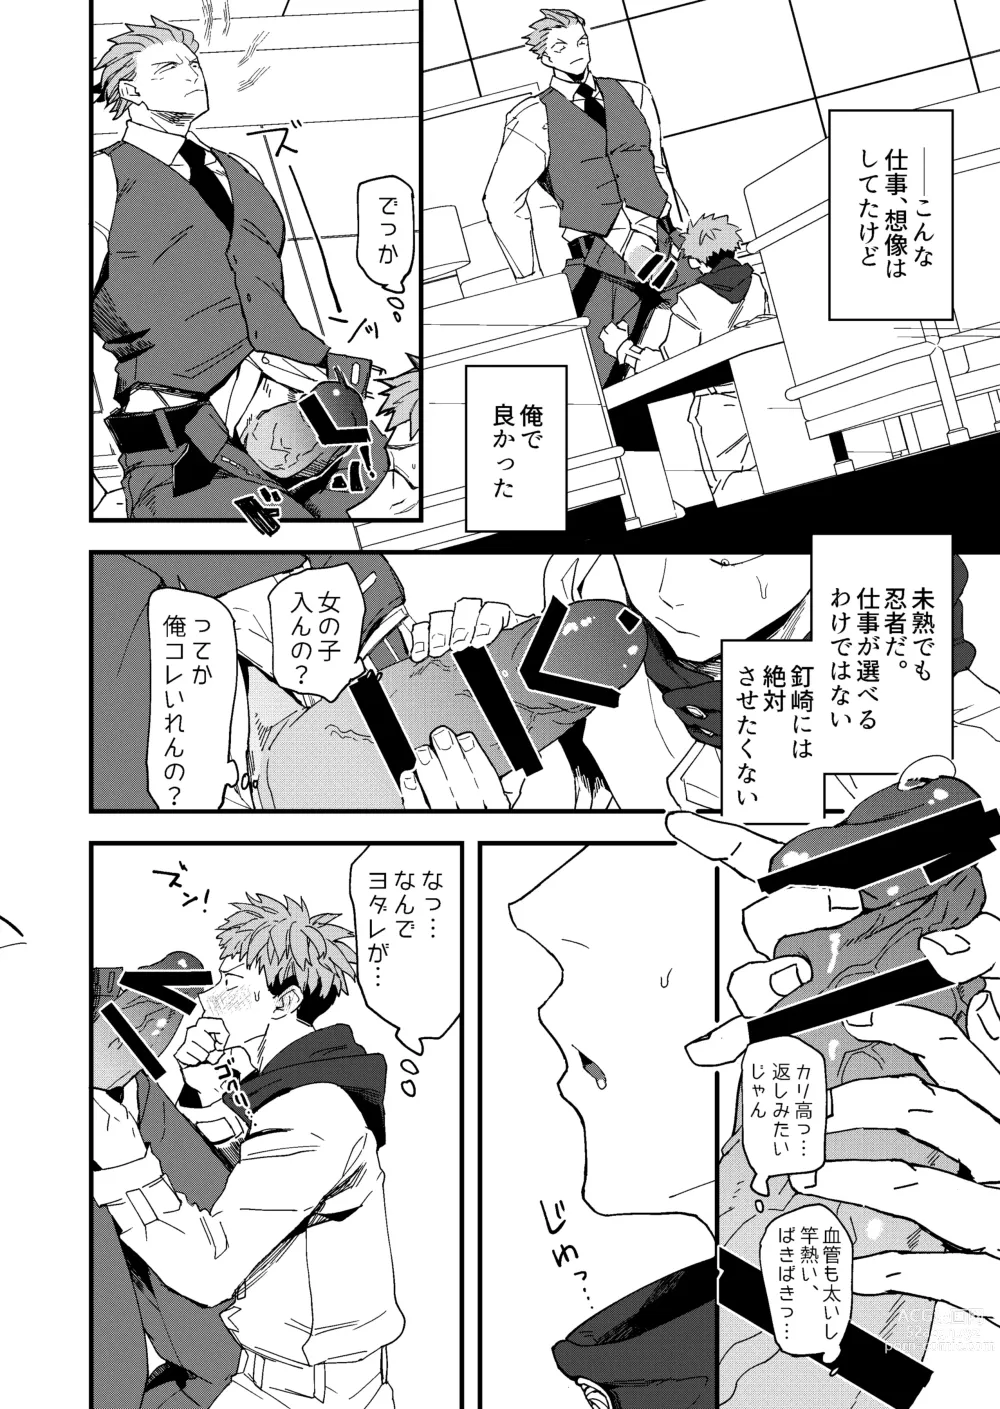 Page 9 of doujinshi Kanzen haiboku